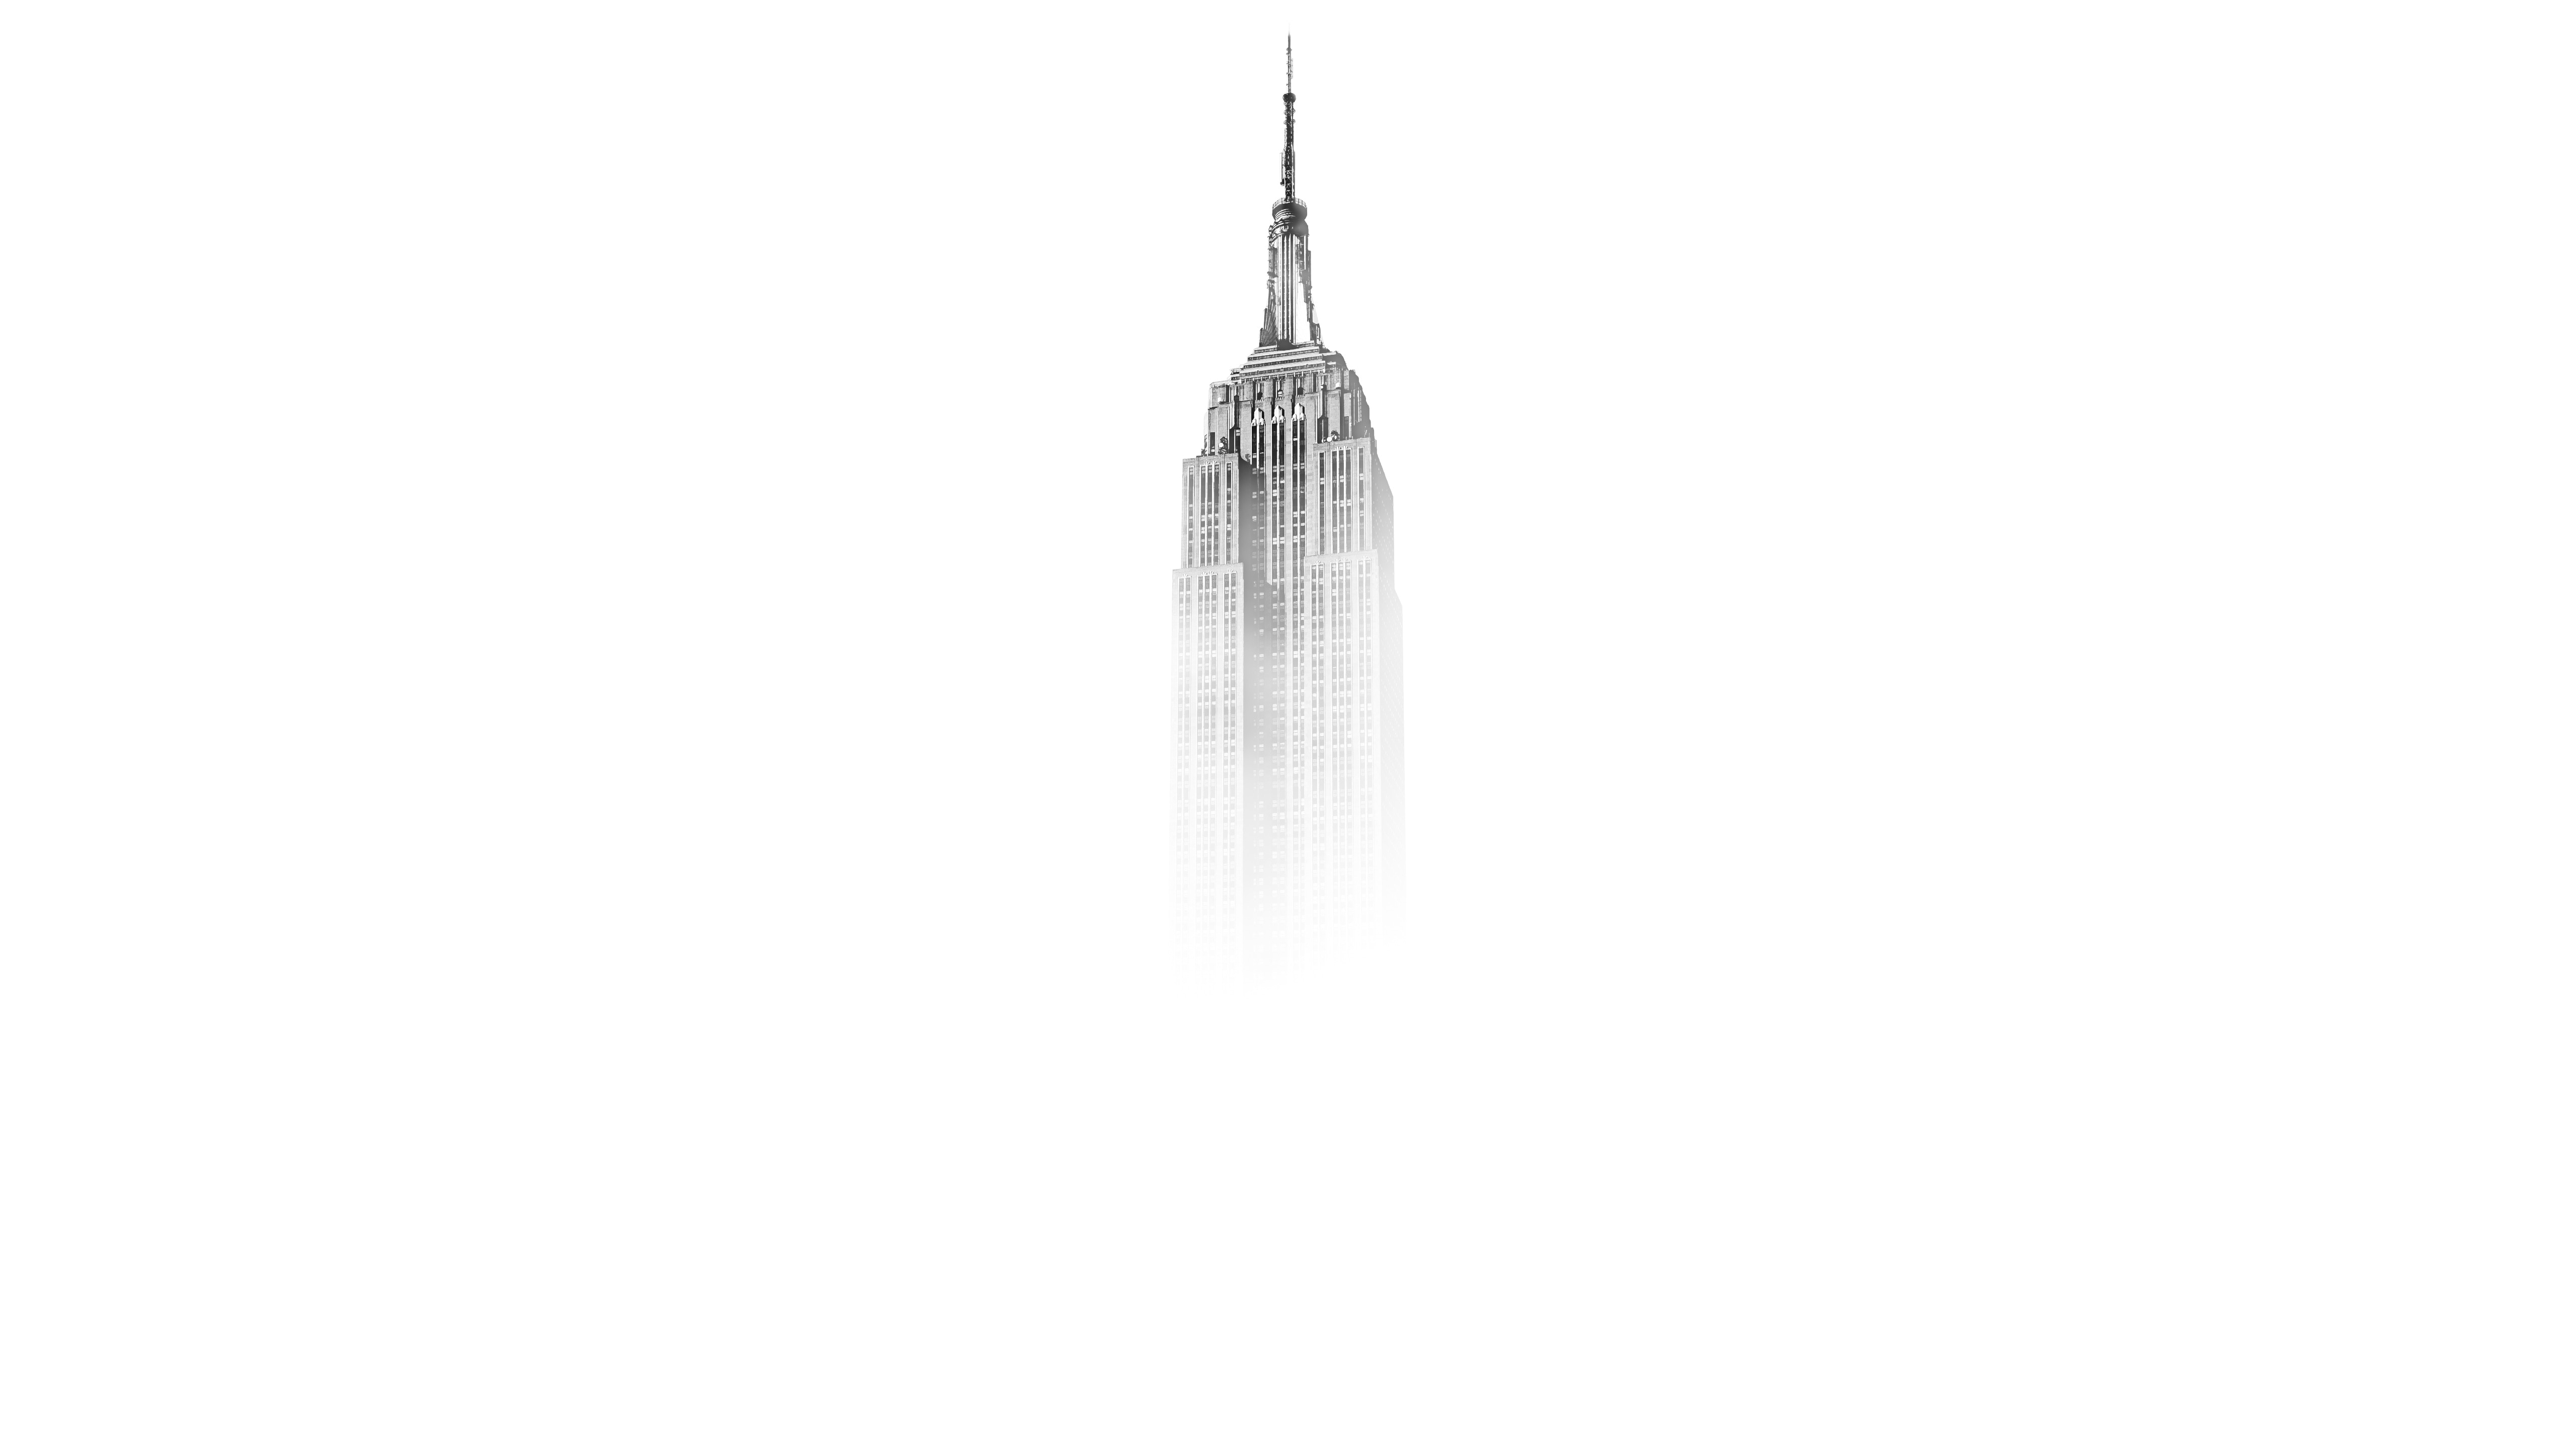 General 5120x2880 Empire State Building New York City white background gradient architecture skyscraper monochrome mist